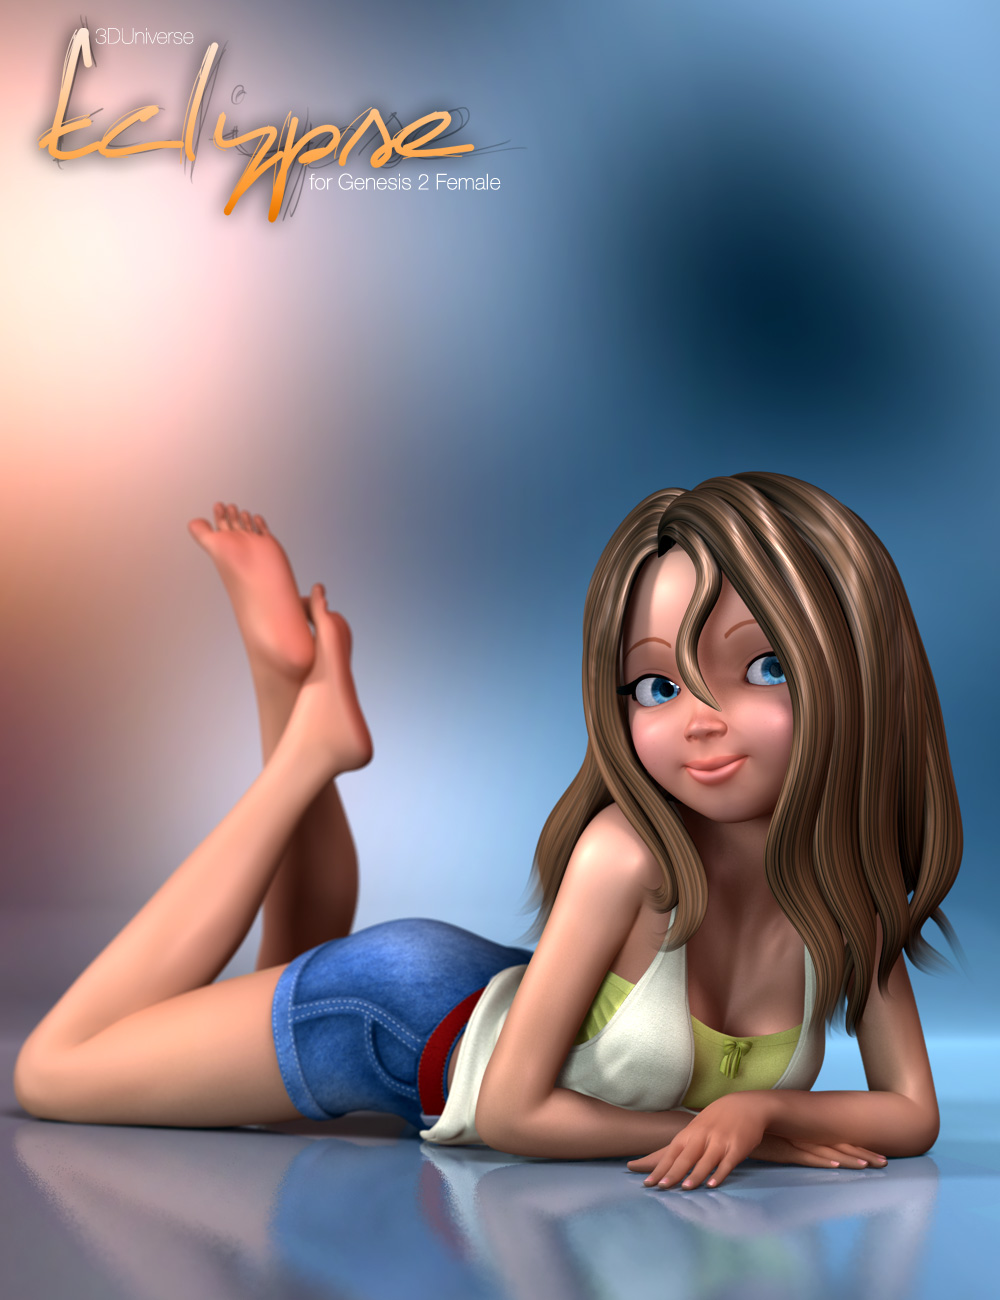 Eclypse for Genesis 2 Female(s) by: 3D Universe, 3D Models by Daz 3D